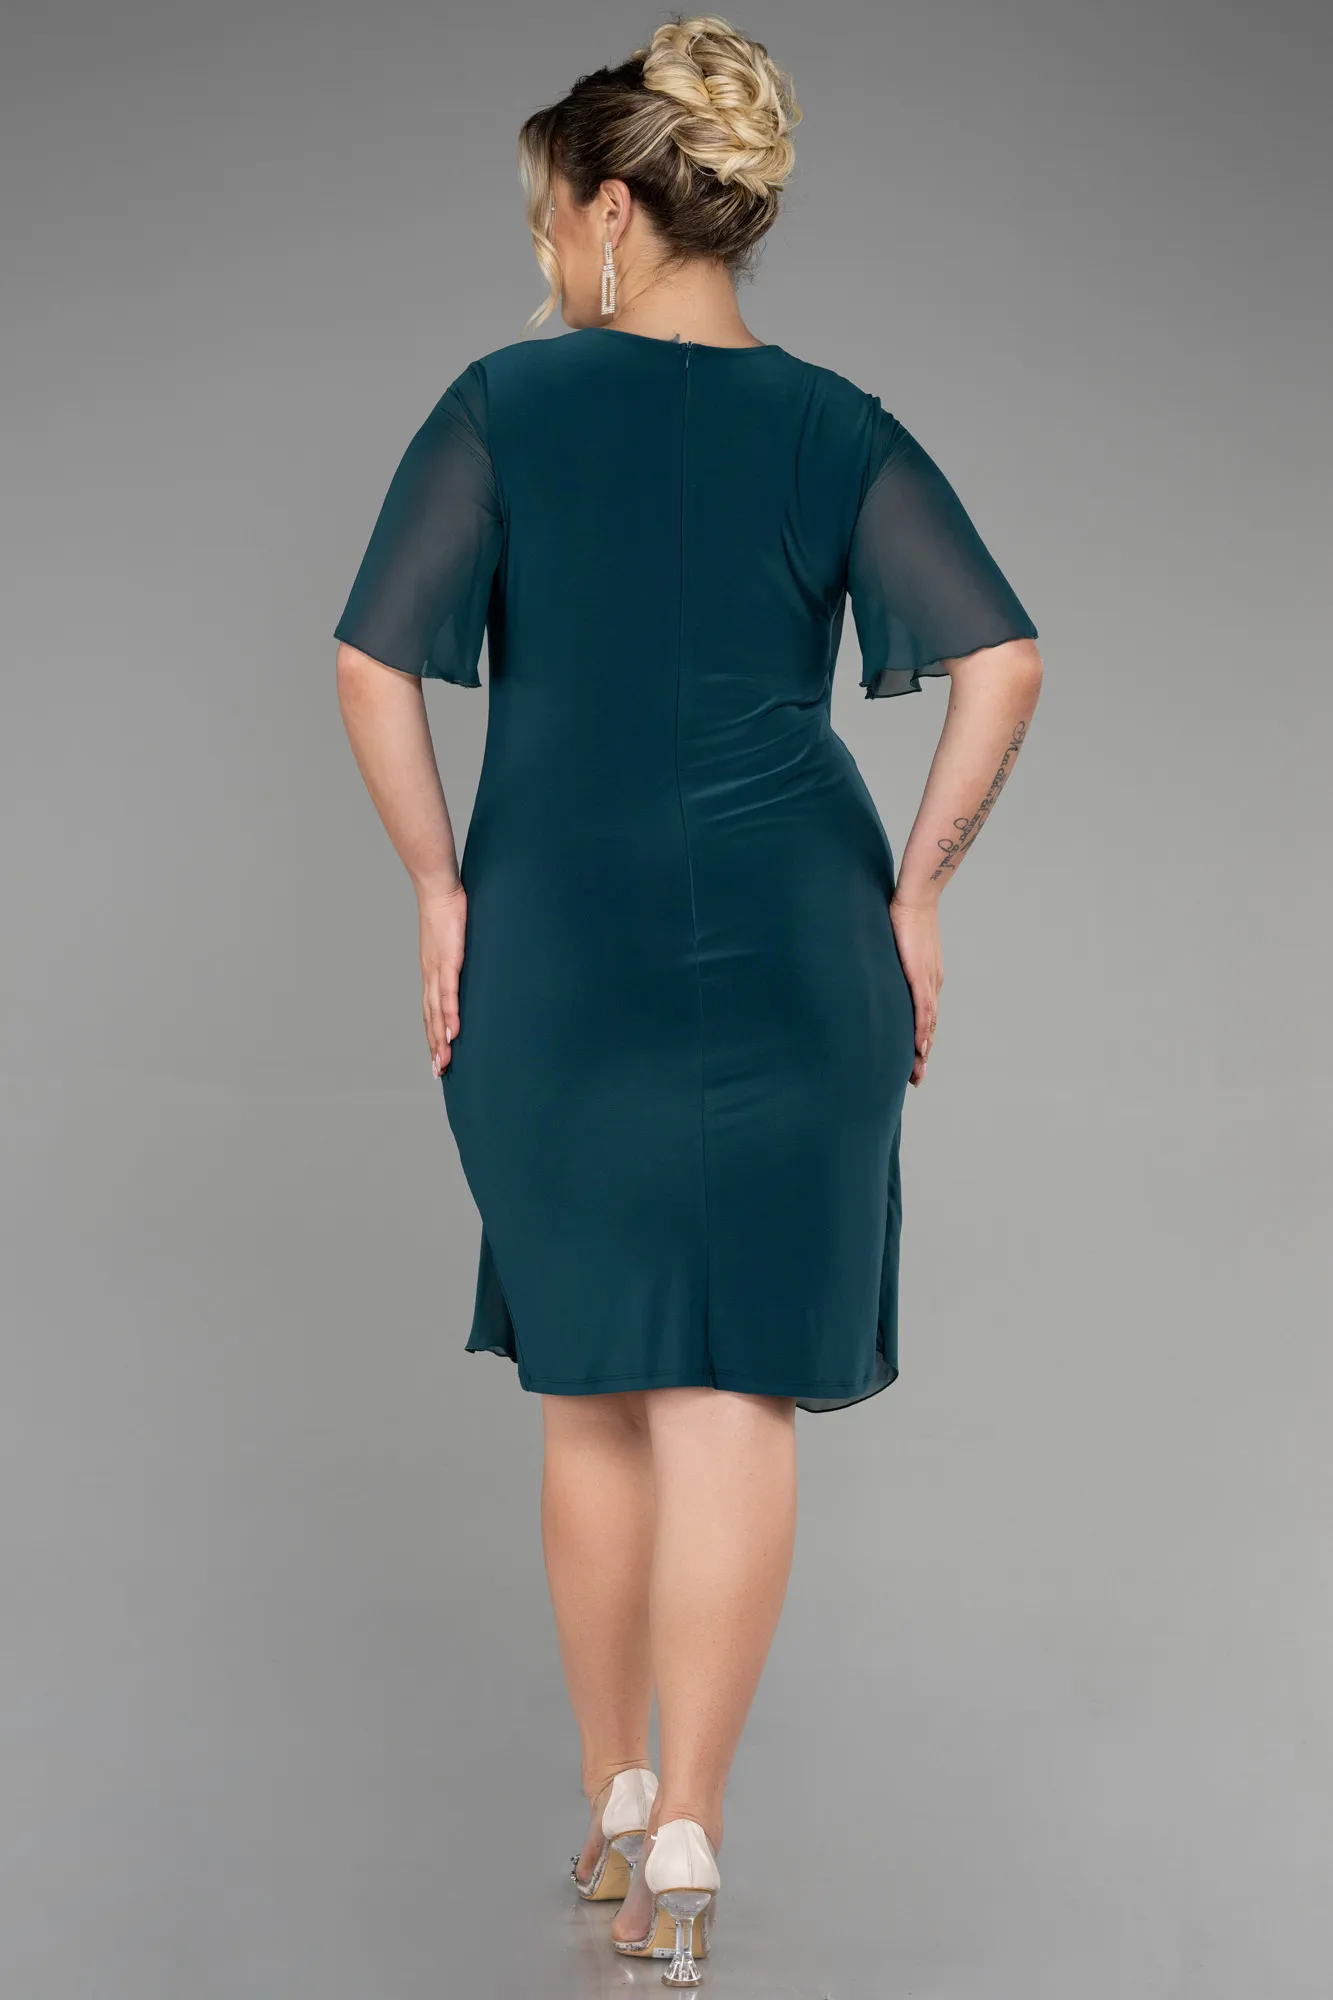 Emerald Green-Short Chiffon Plus Size Evening Dress ABK1299